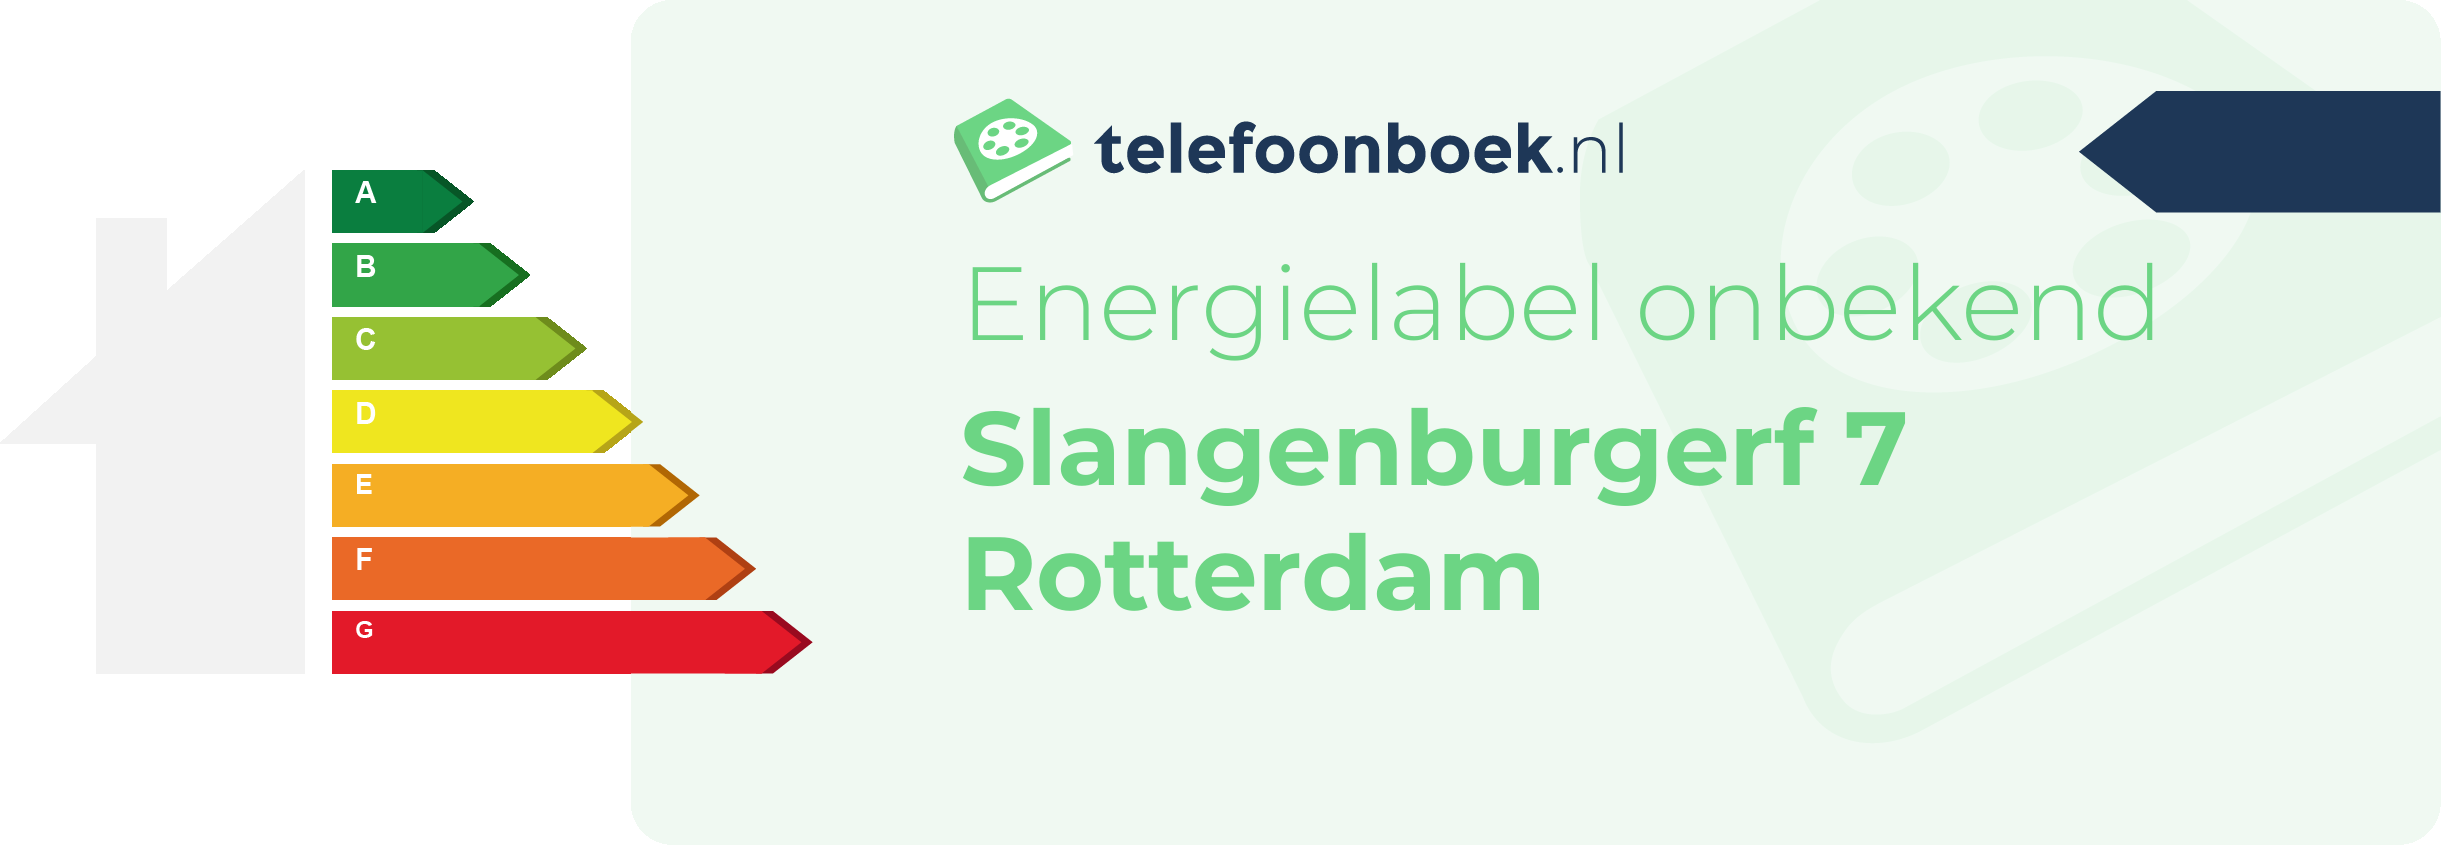 Energielabel Slangenburgerf 7 Rotterdam